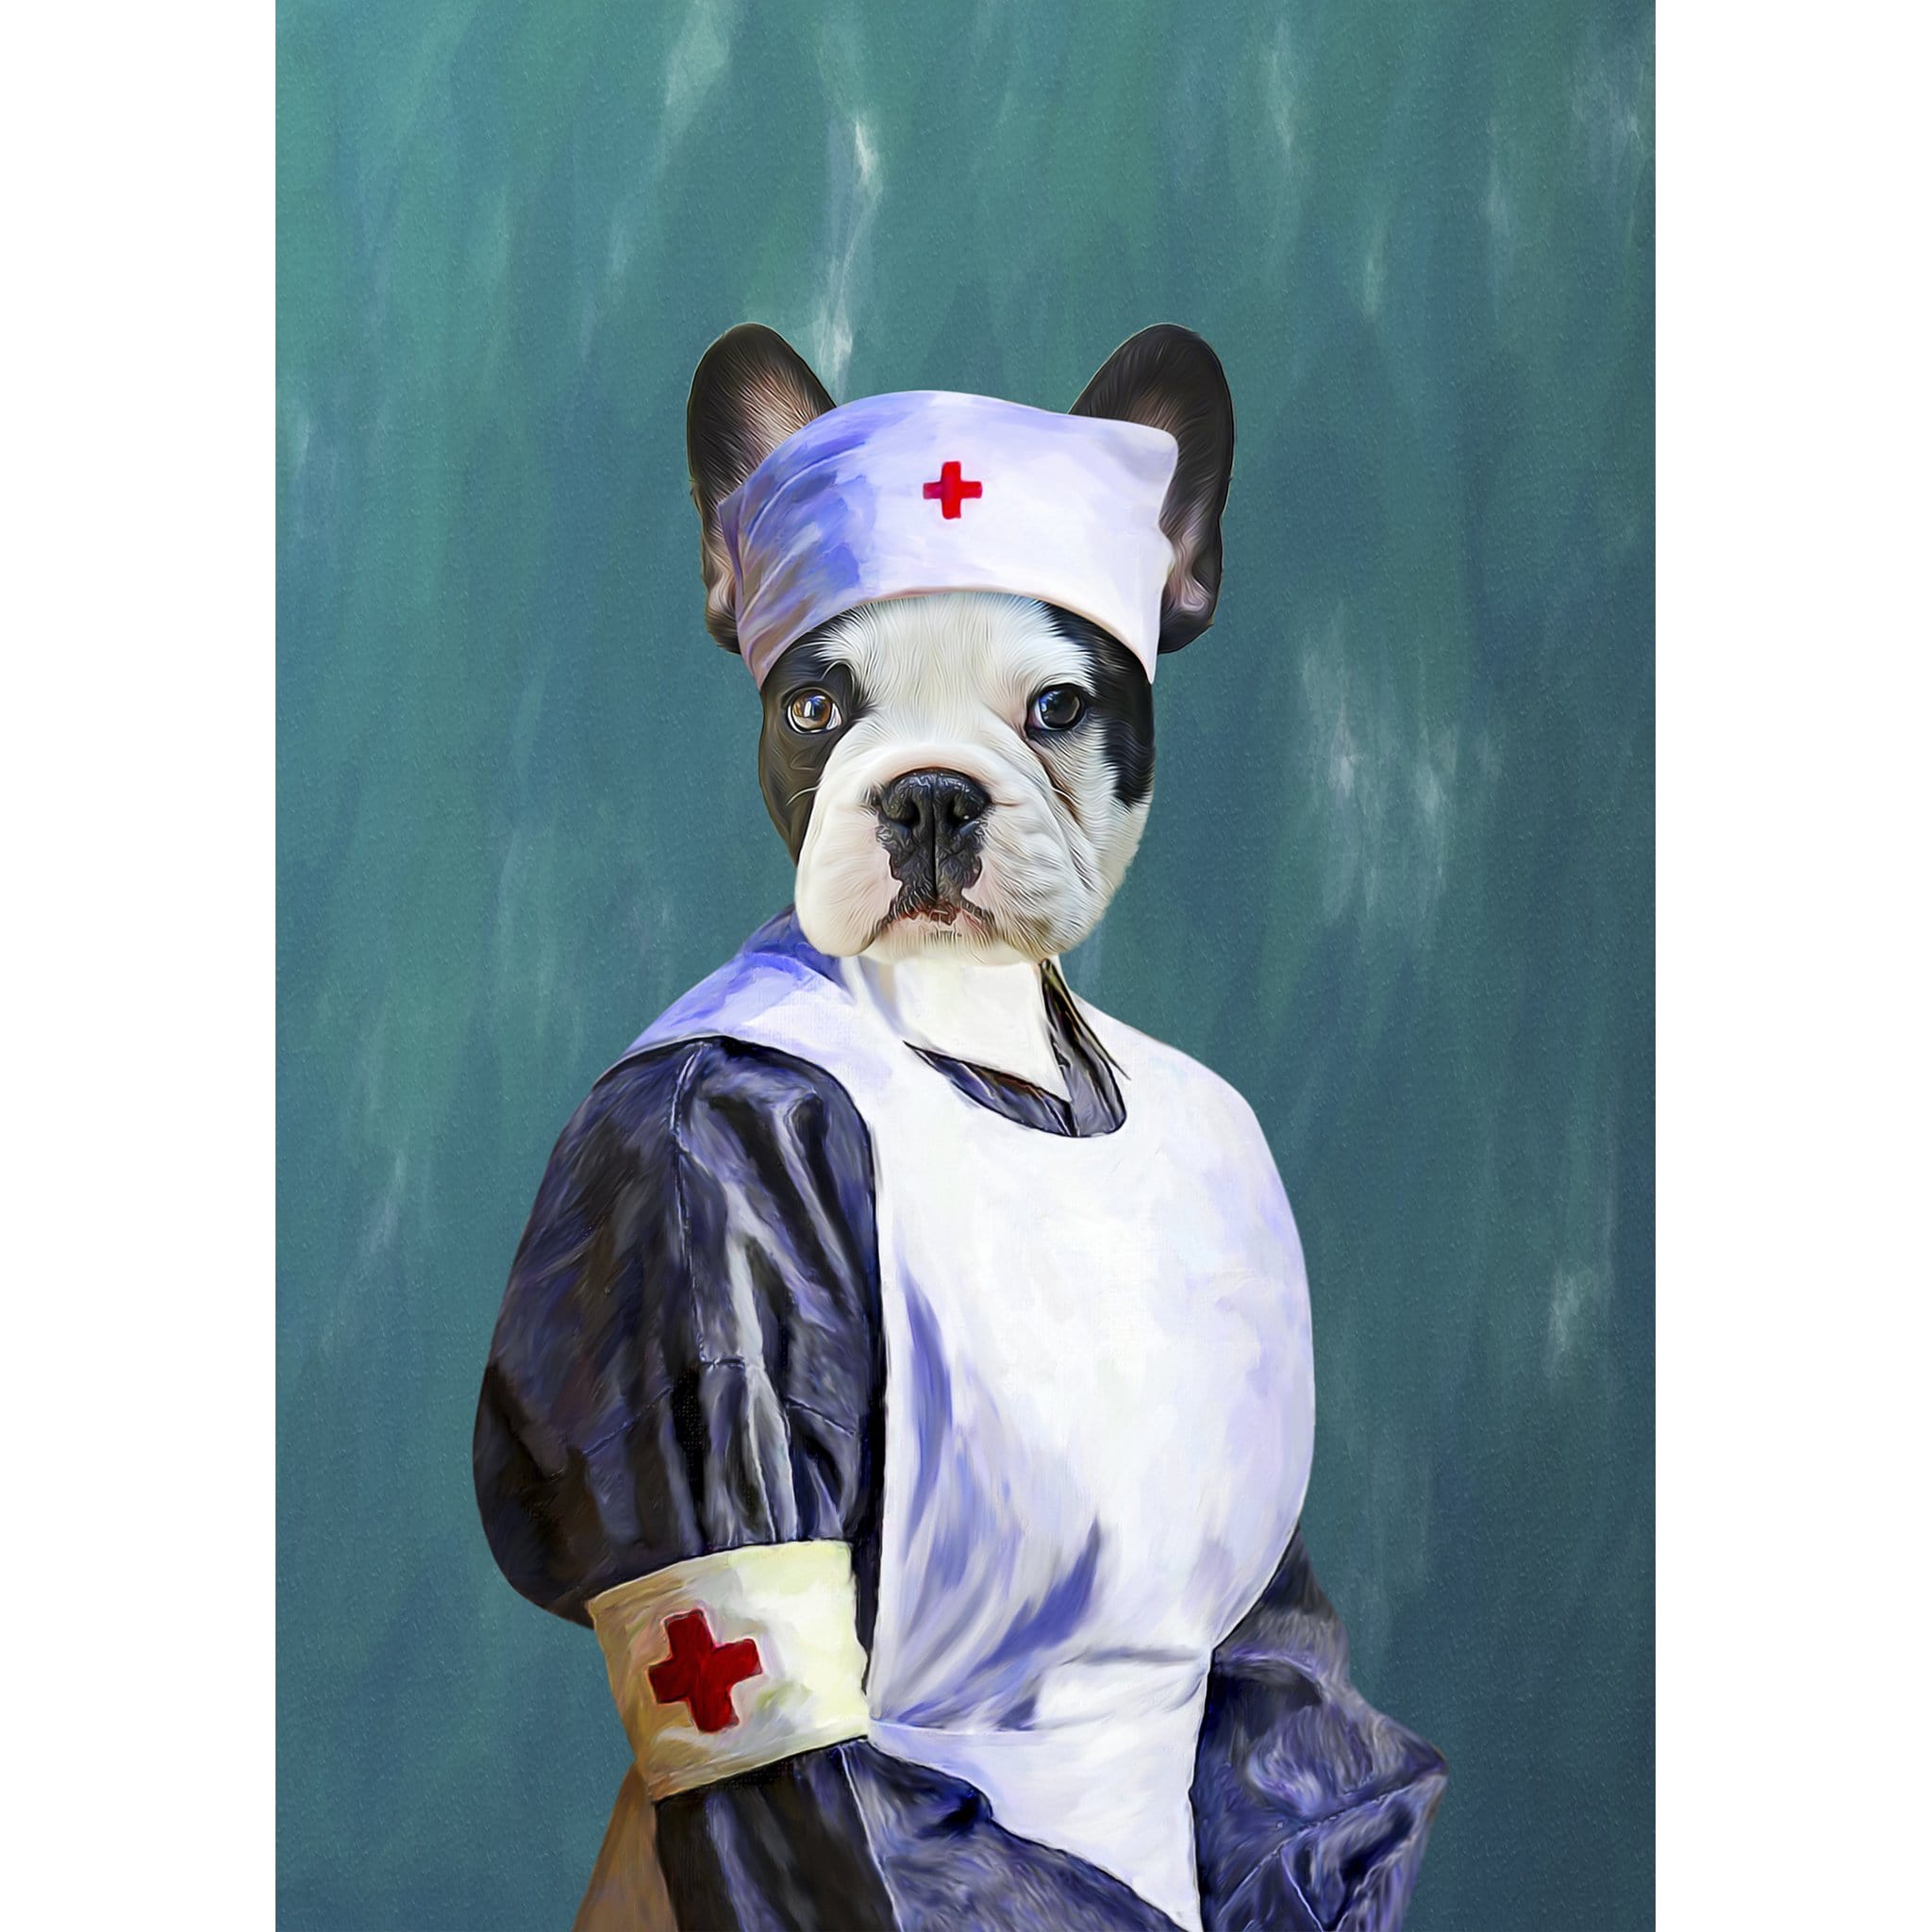 'The Nurse' Digital Portrait